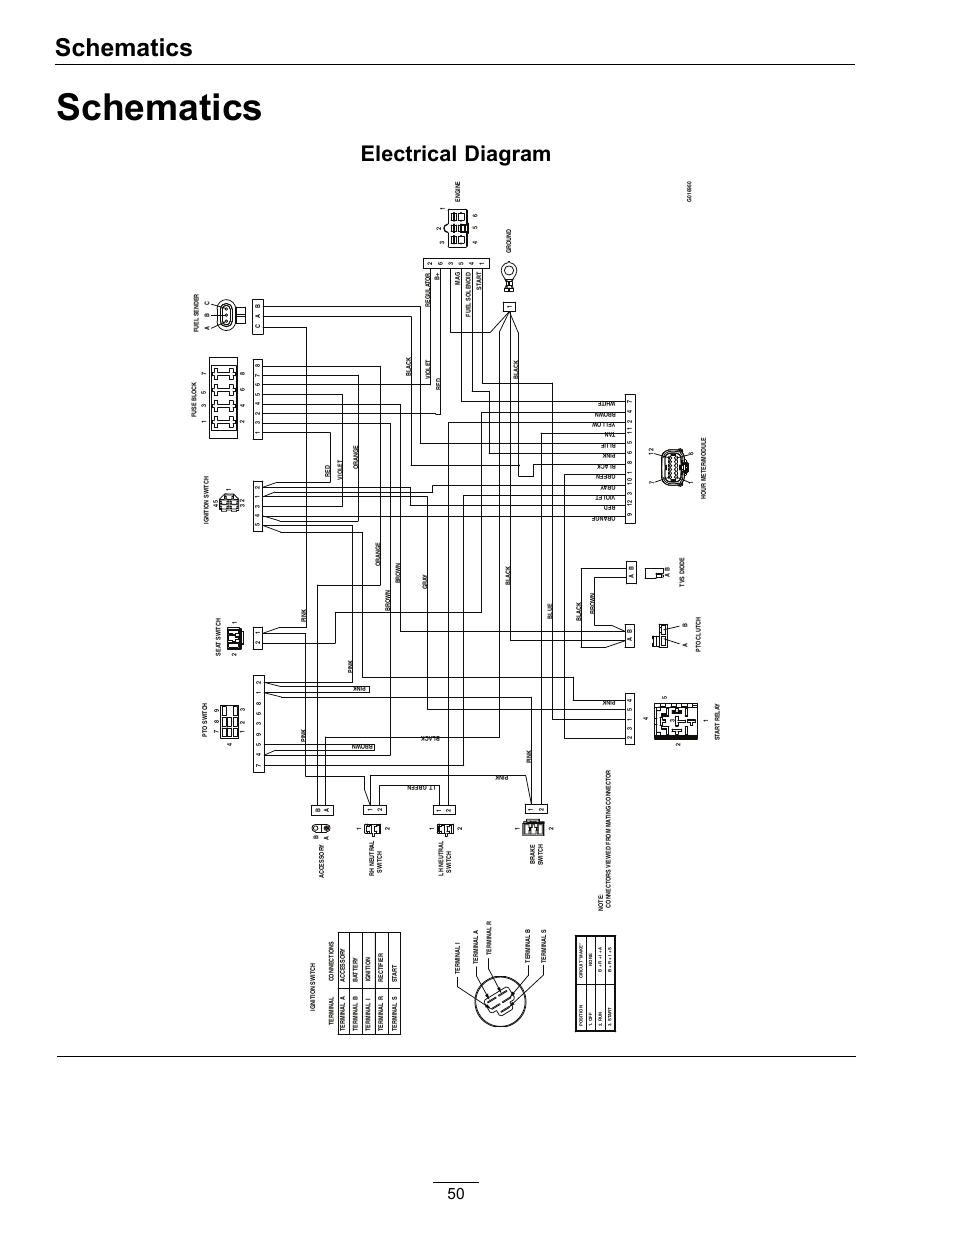 honda gx270 wiring diagram